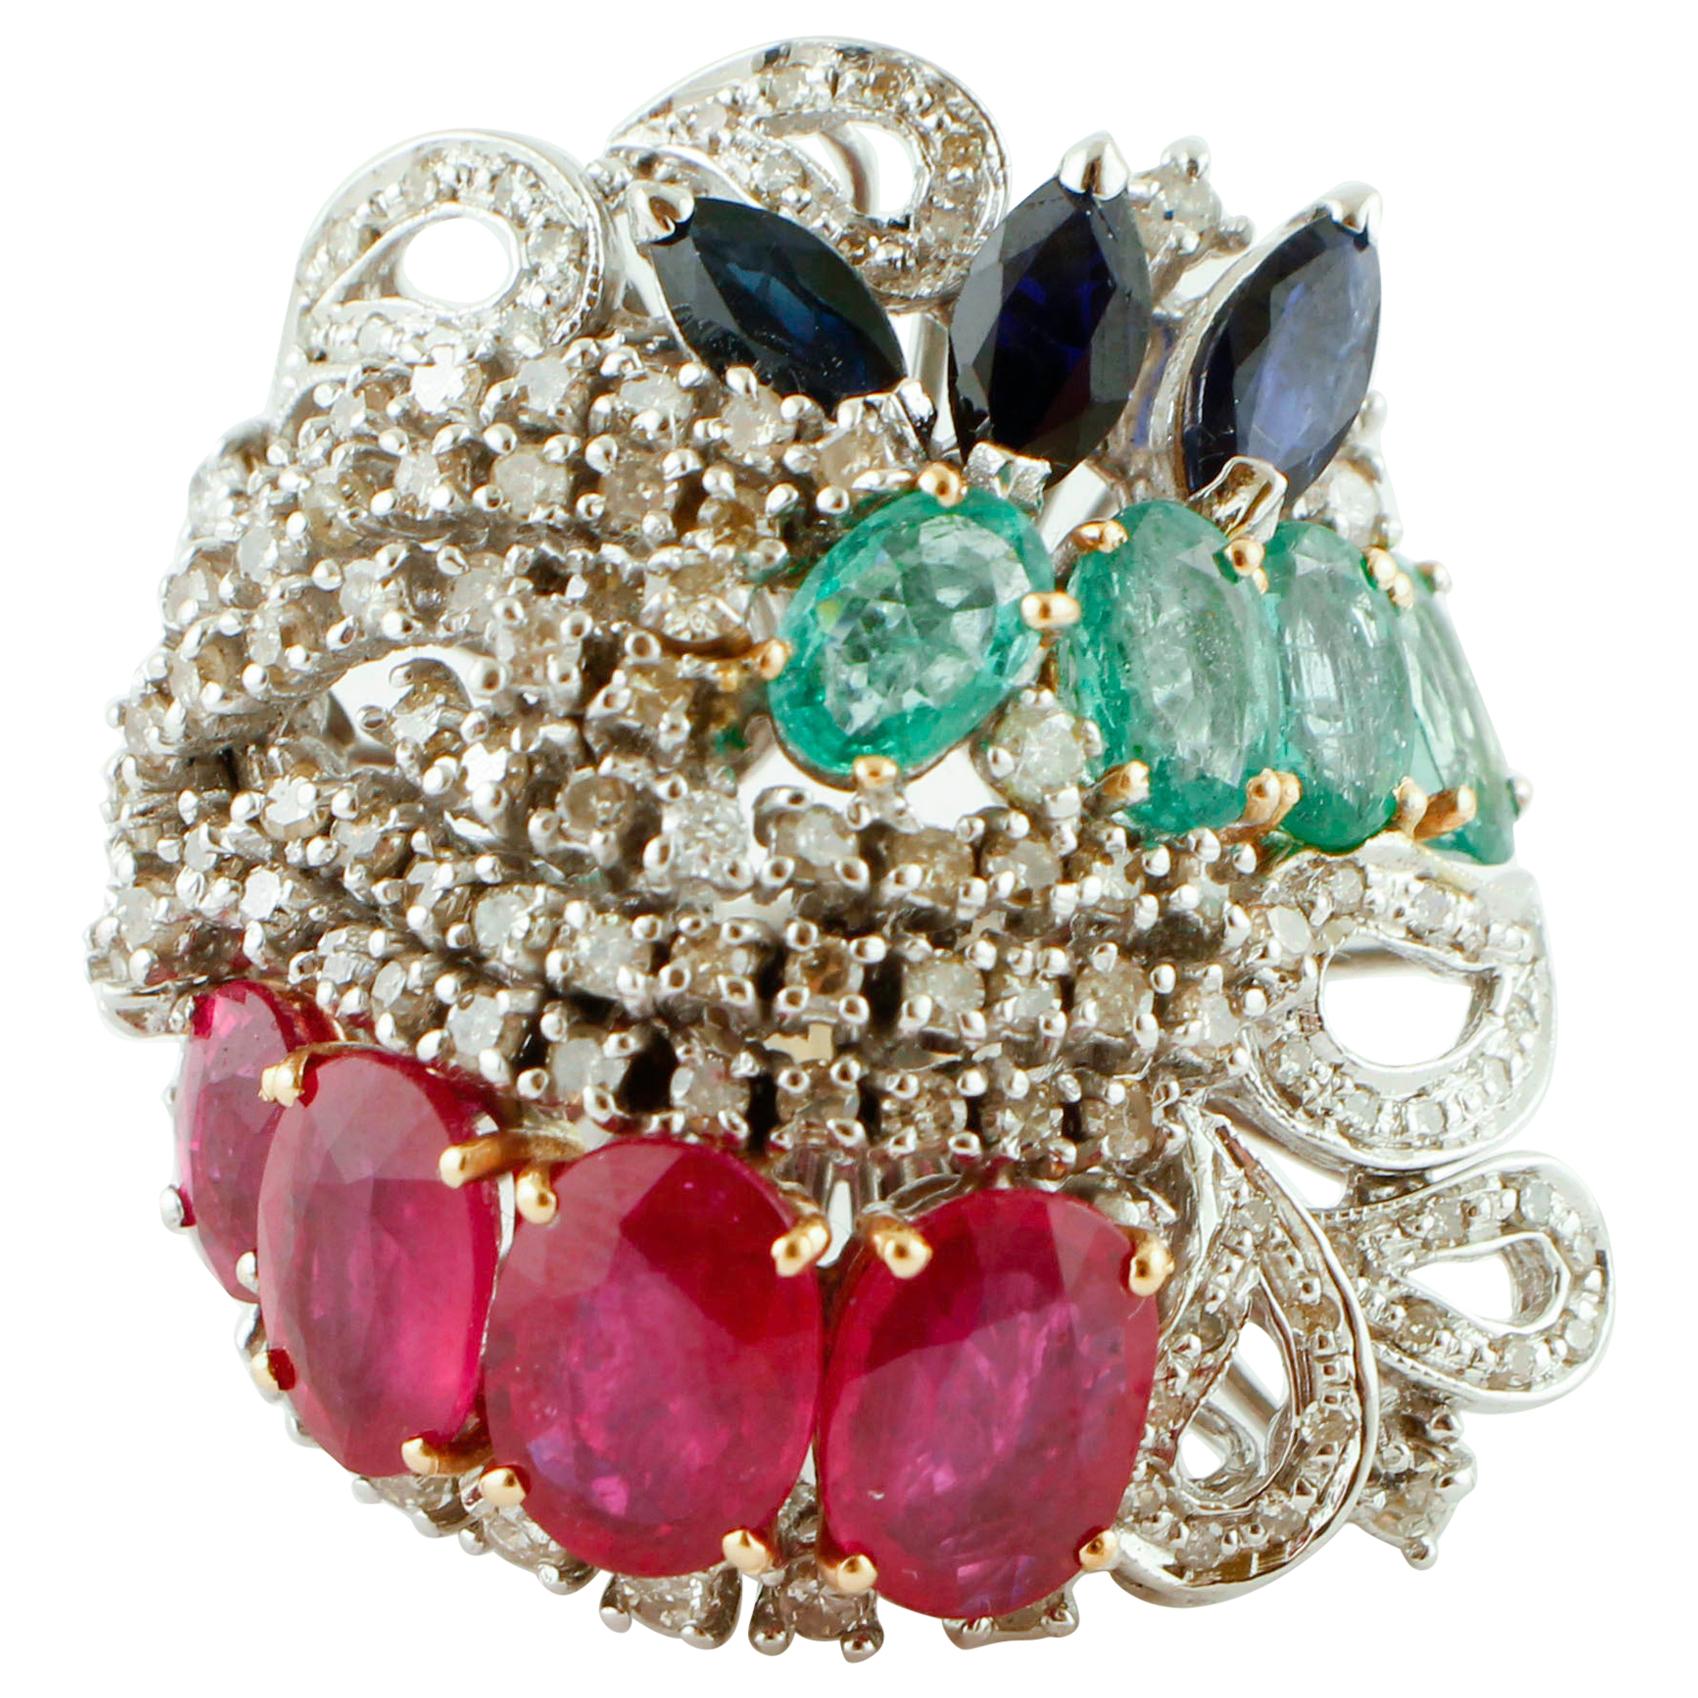 Ovale Rubine, ovale Smaragde, ovale Smaragde, blaue Navette-Saphire, Diamanten, Ring aus 18 Karat Gold